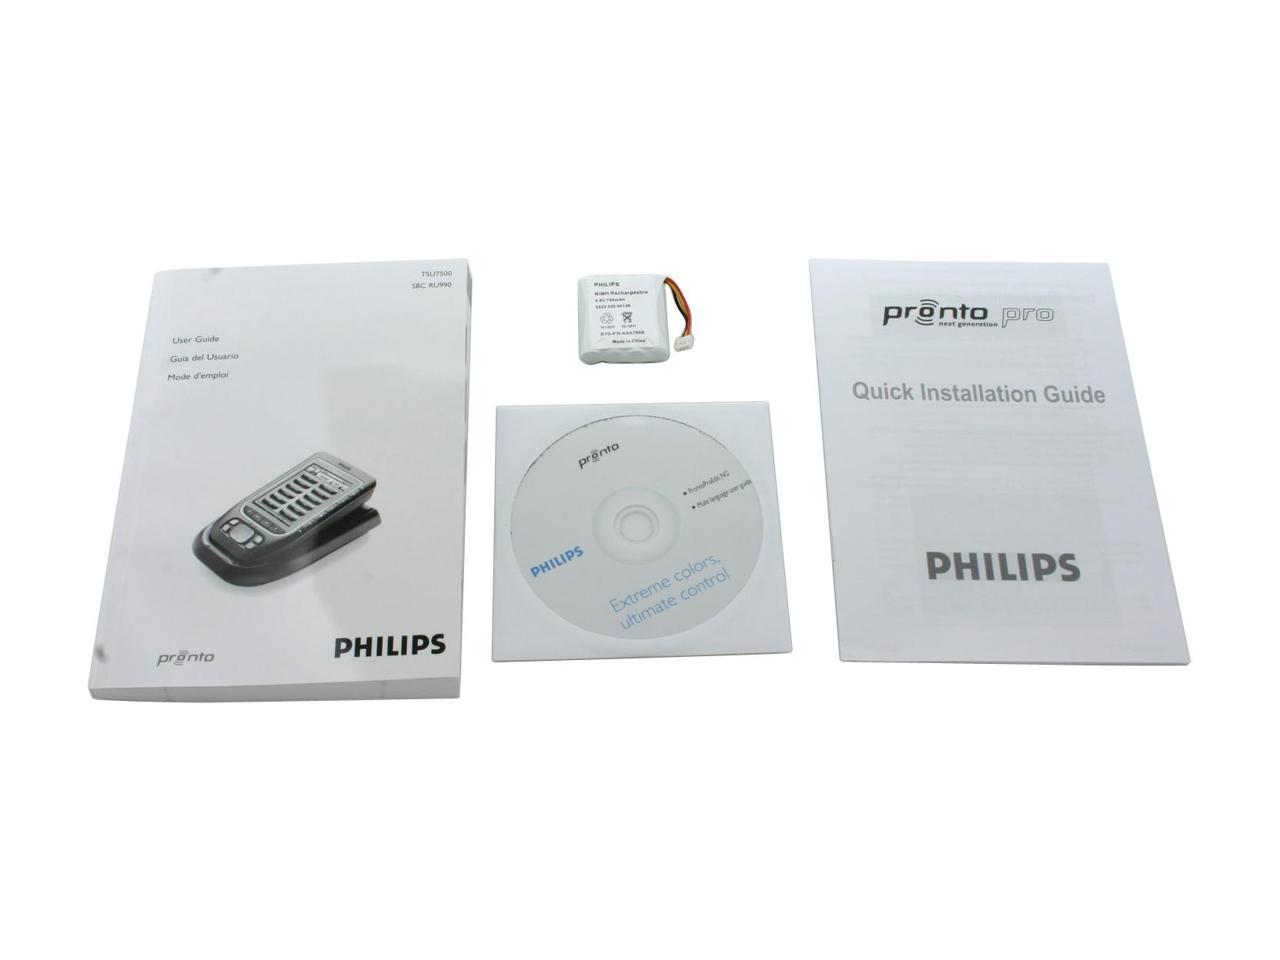 philips home cinema control multibrand universal